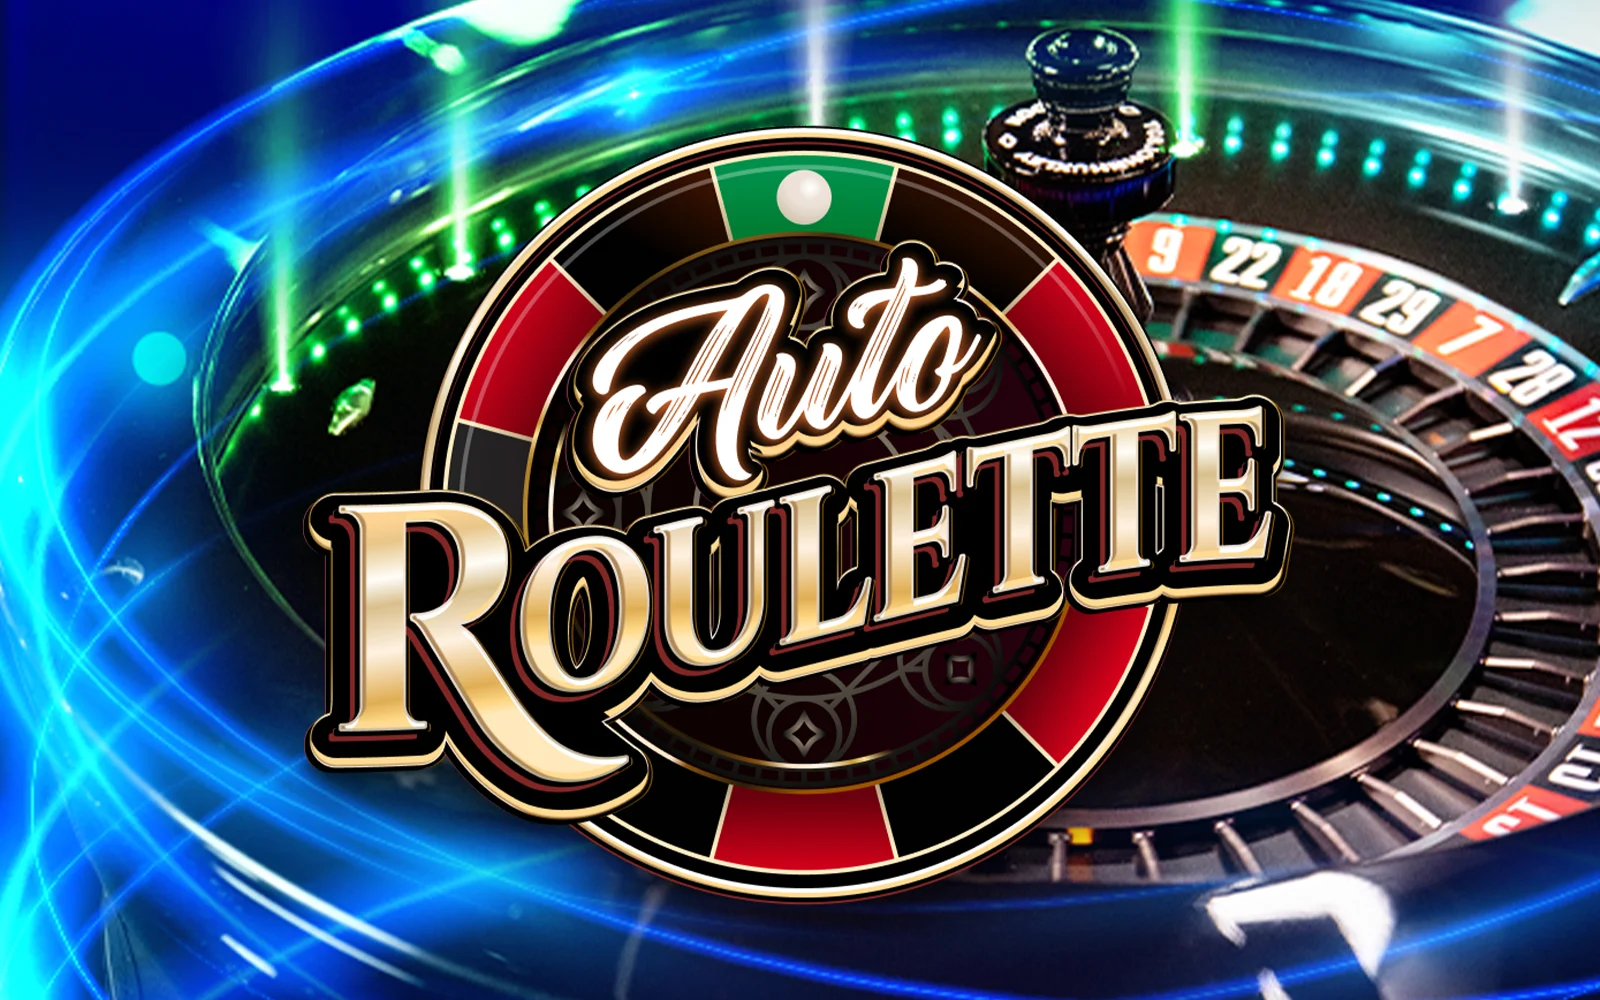 Play Auto Roulette on Starcasinodice.be online casino